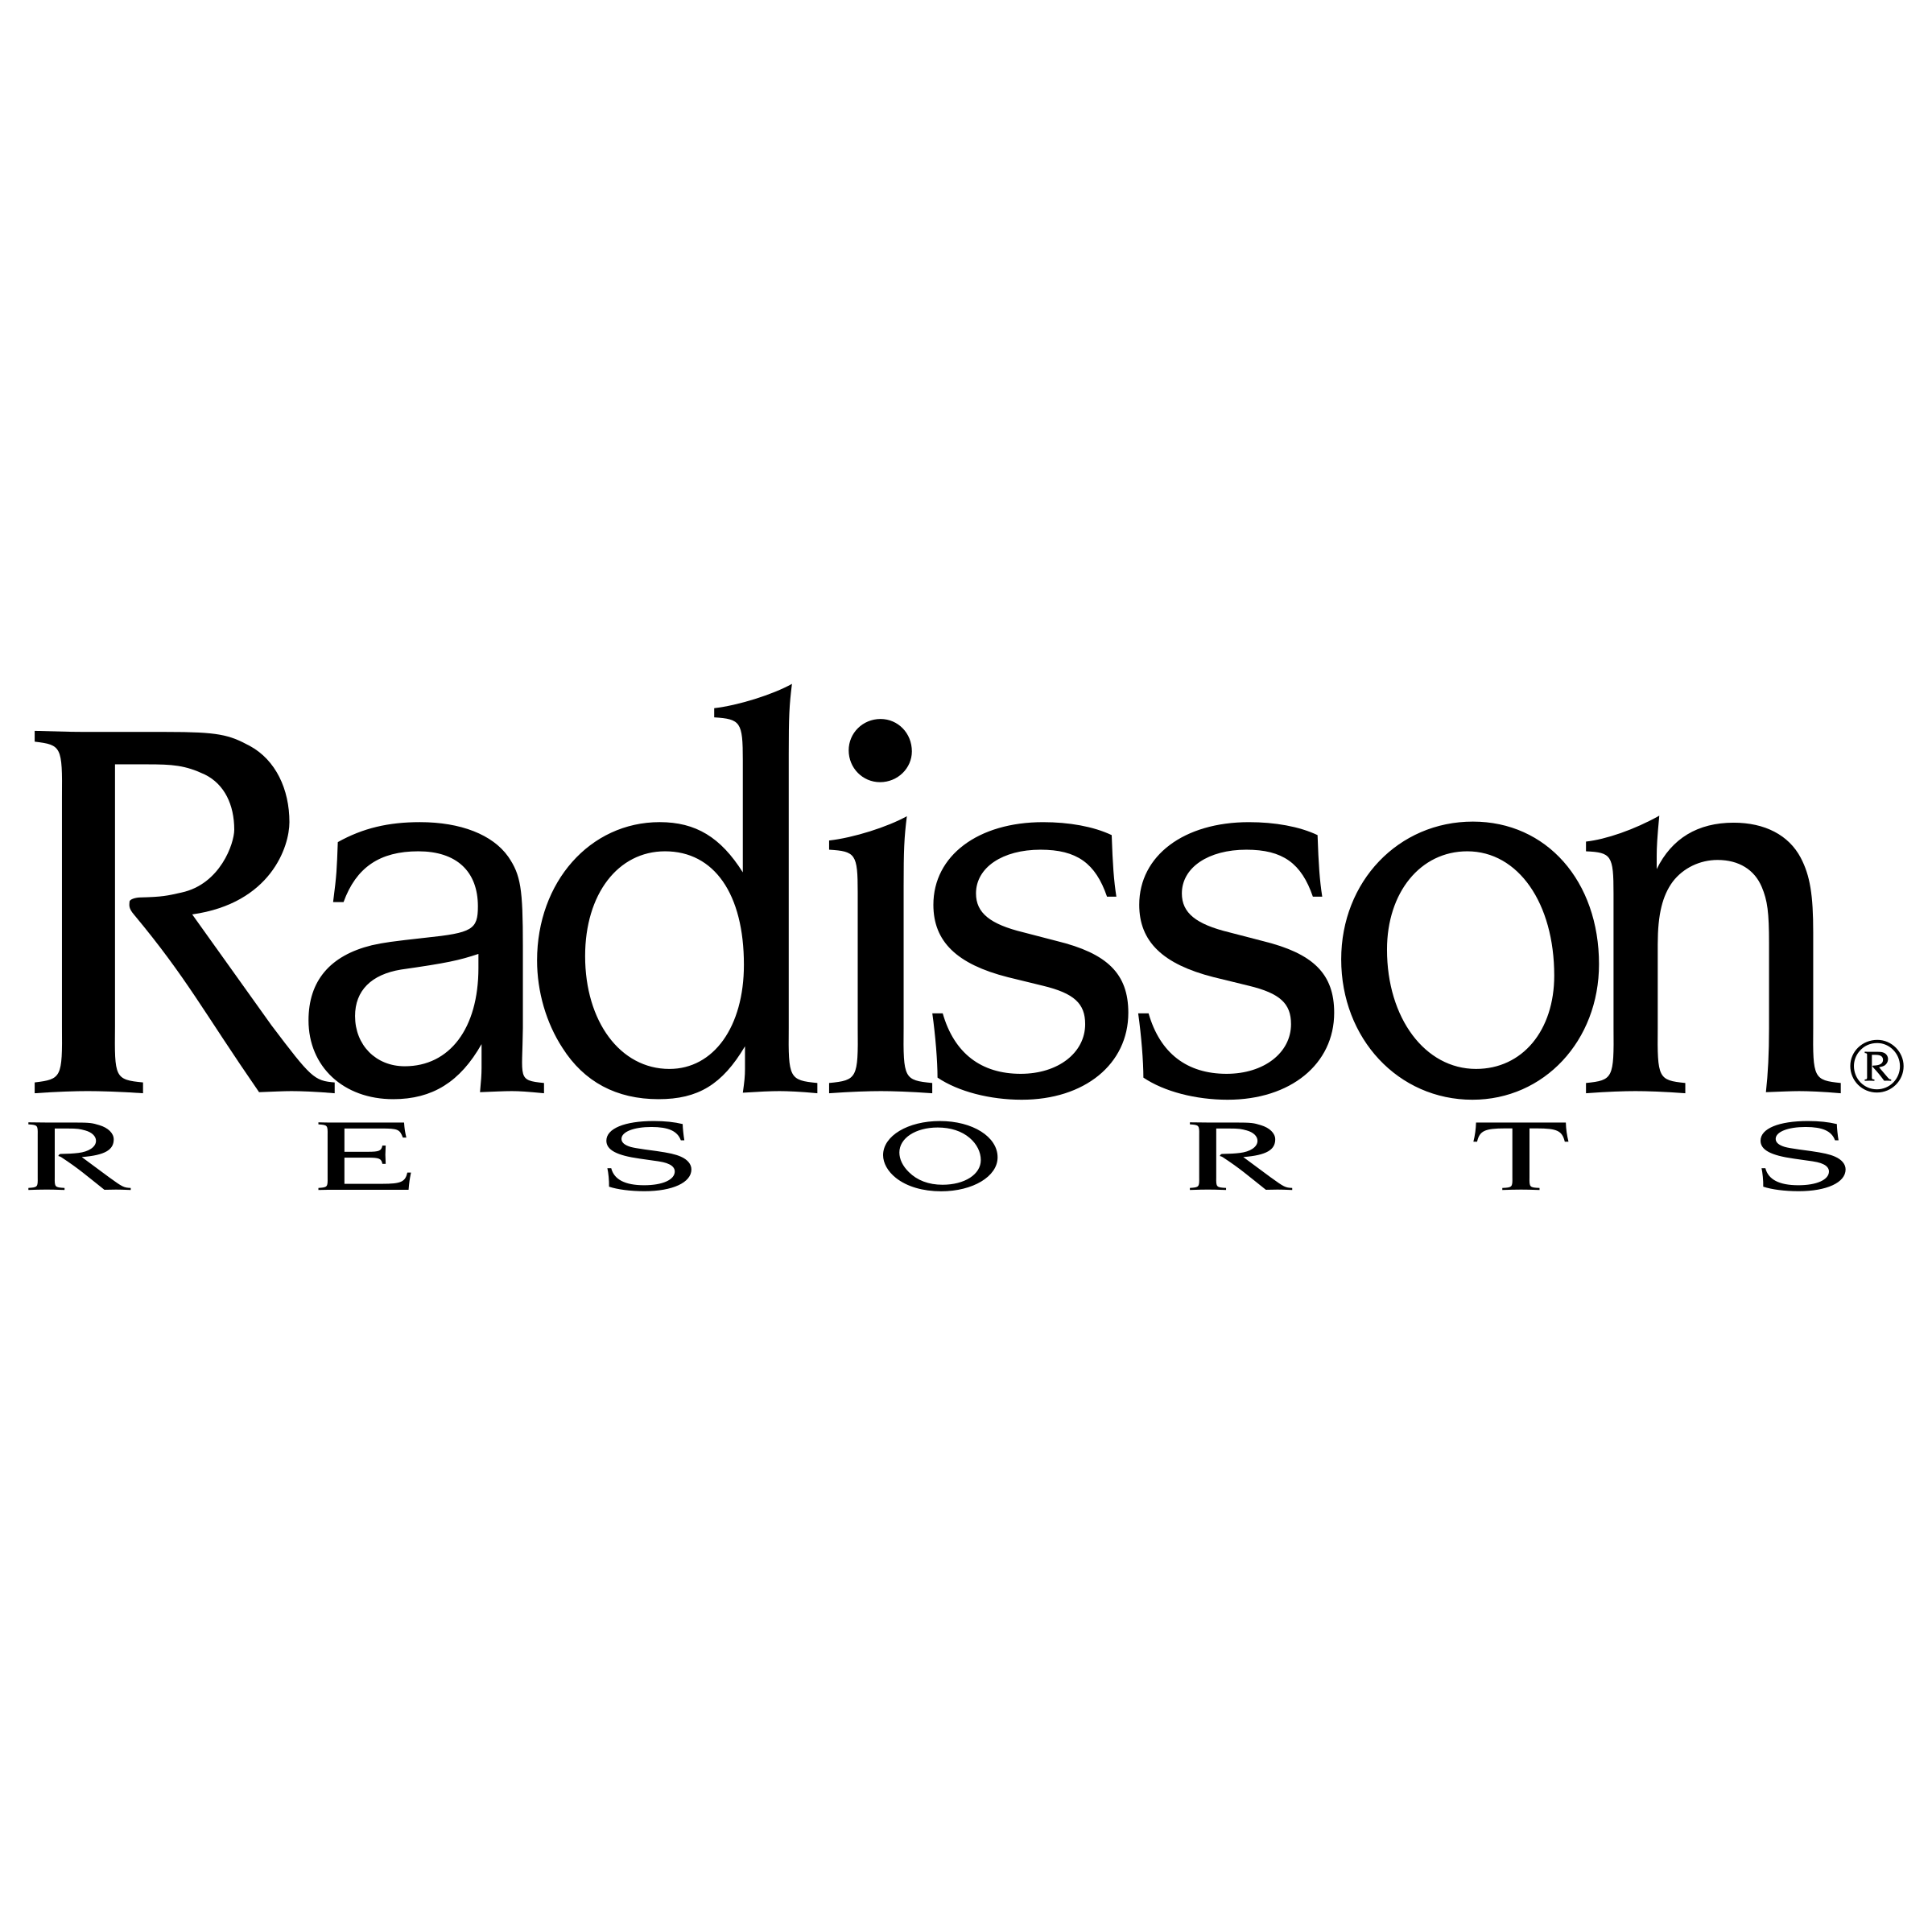 Radisson Logo - Radisson Resorts Logo PNG Transparent & SVG Vector